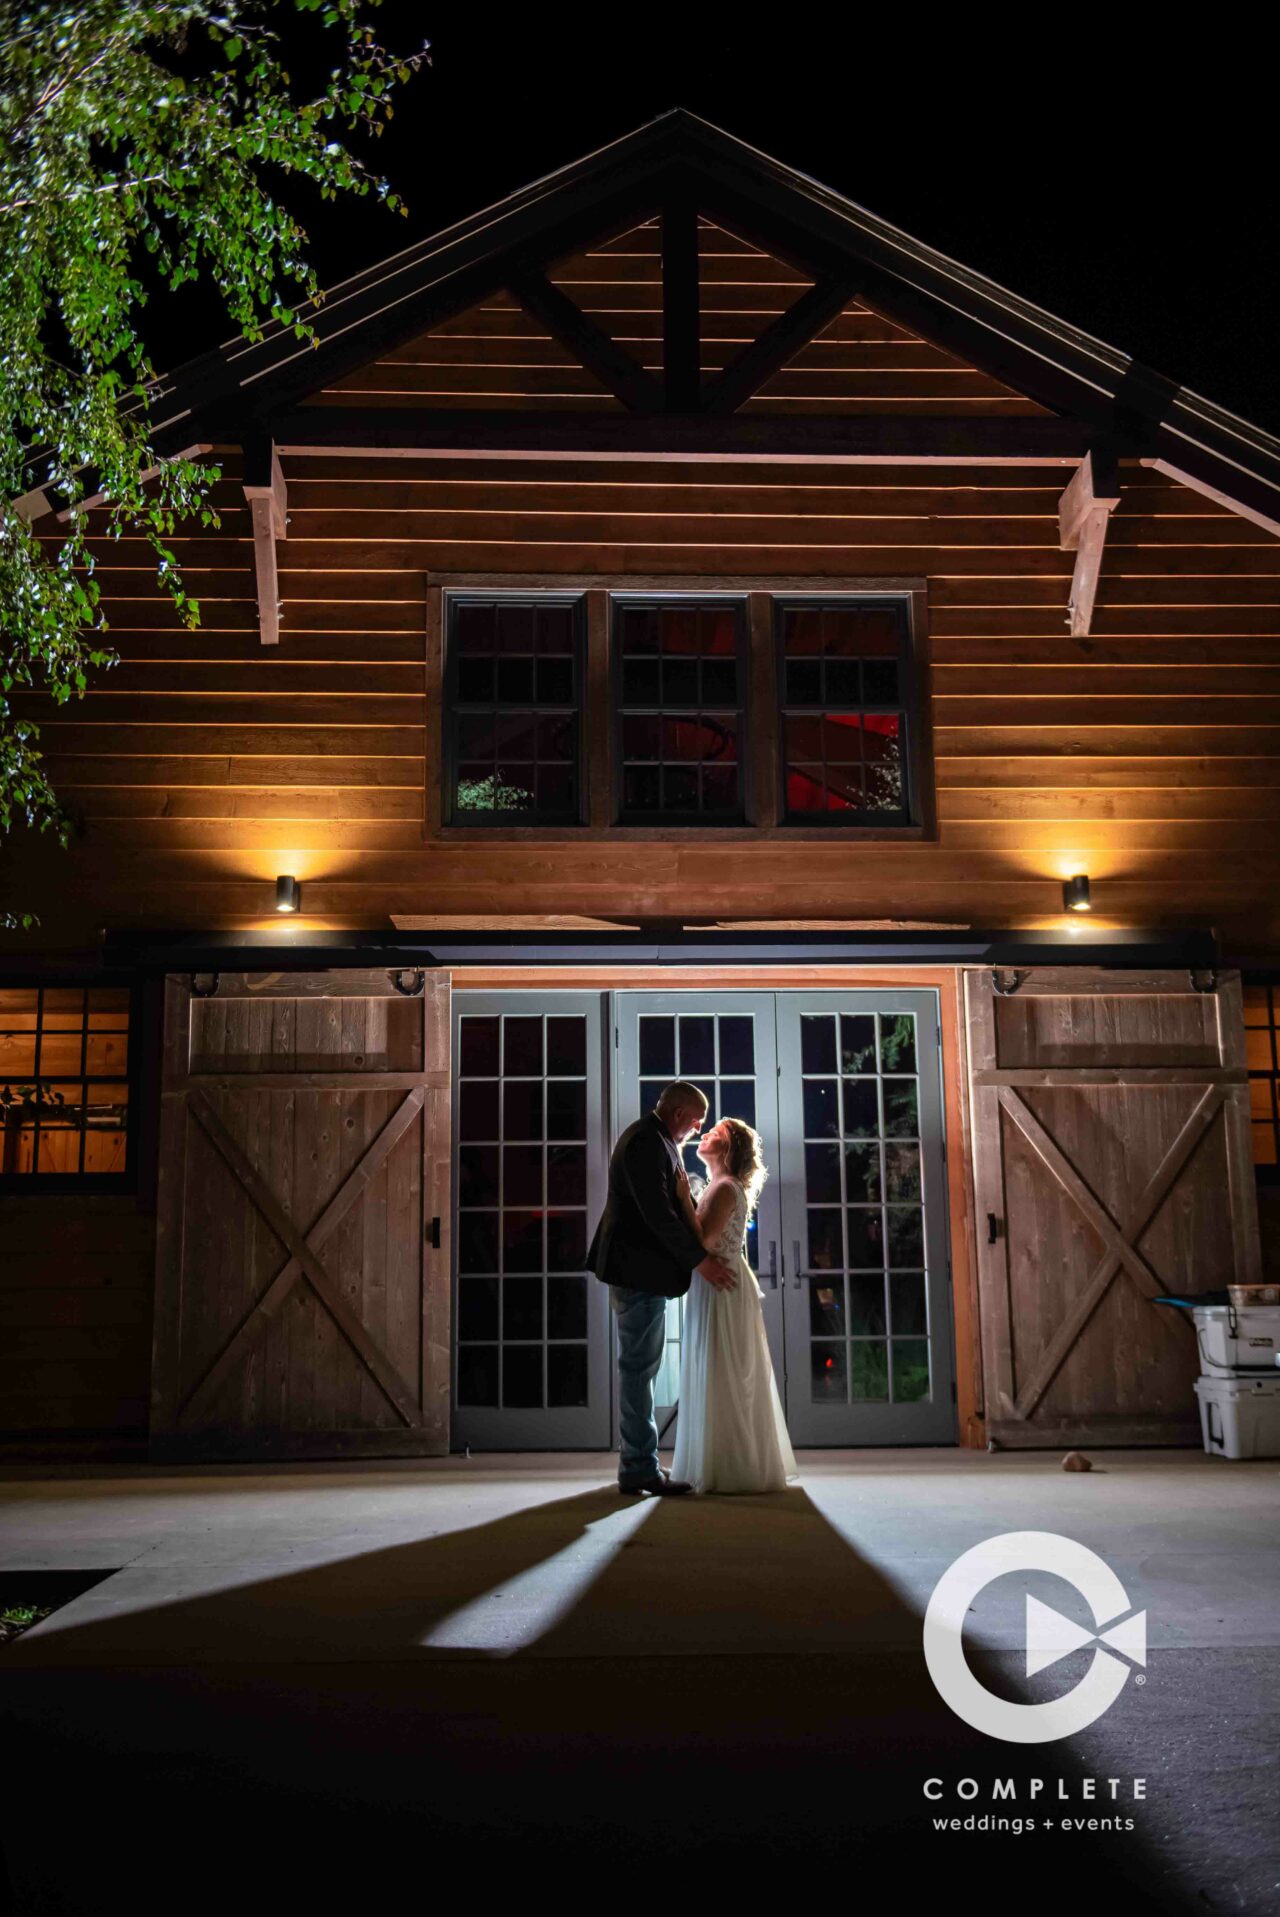 Capturing the Magic: End-of-Night Wedding Photos